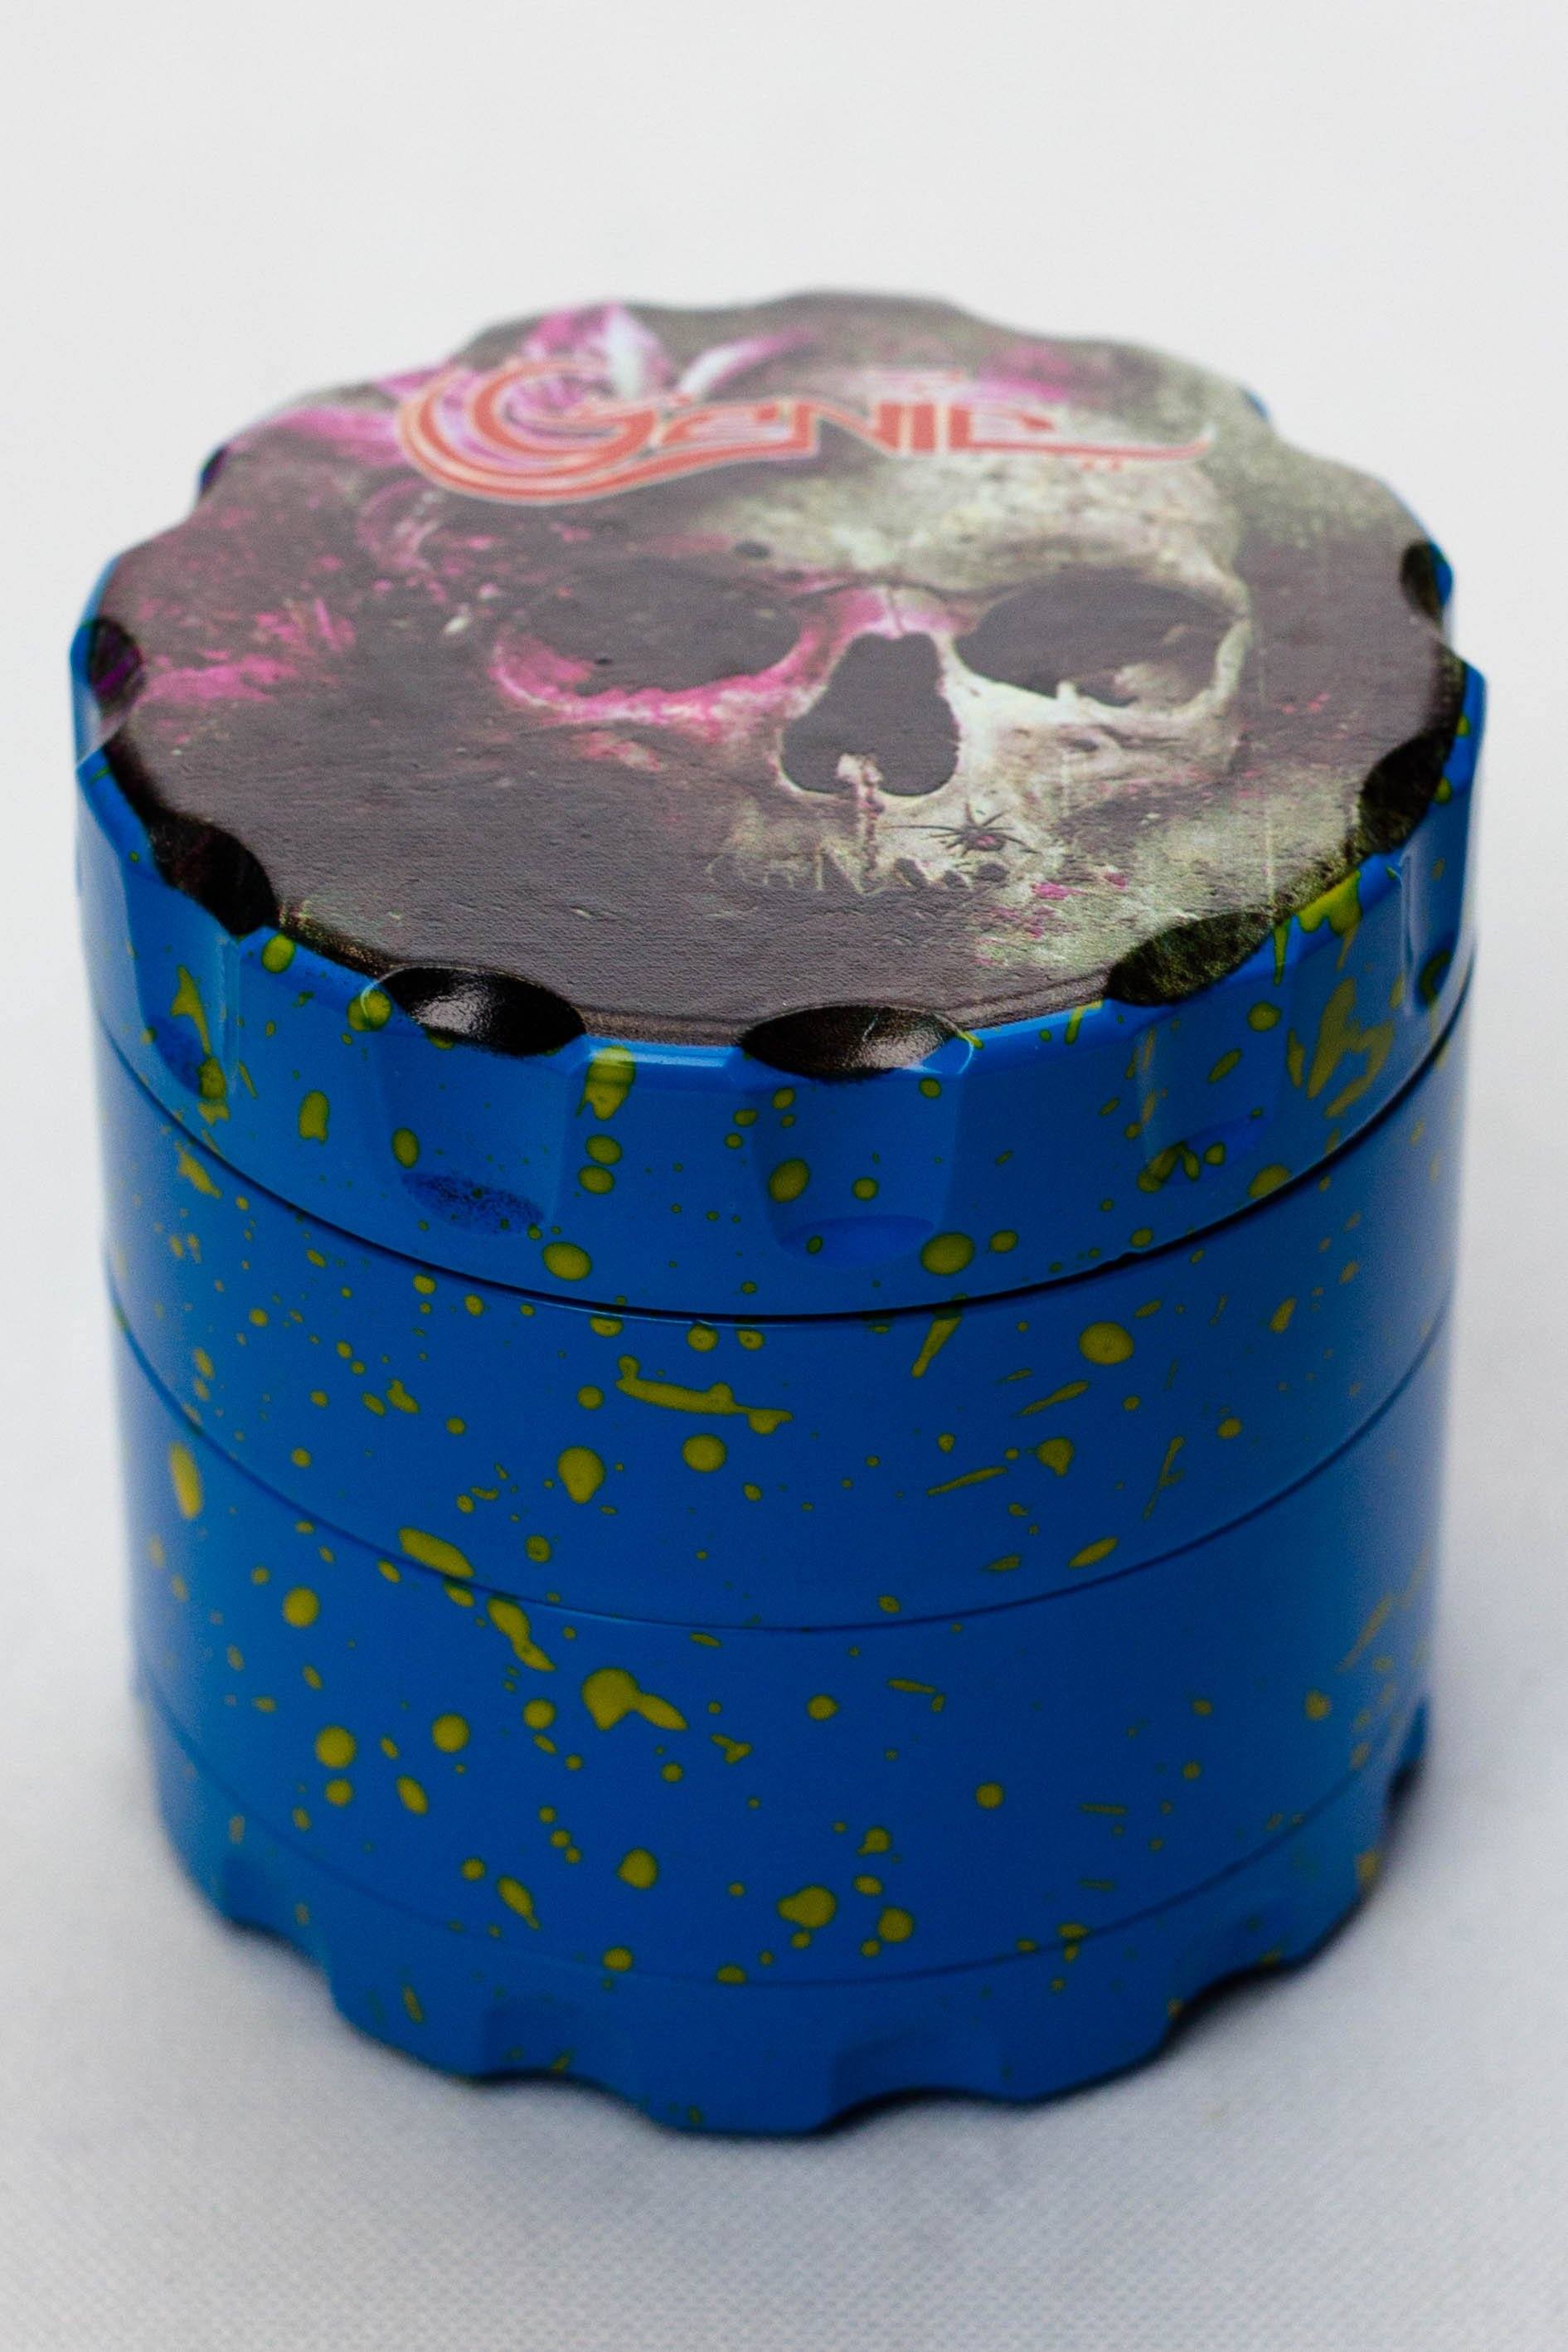 4 parts skull graphic printed large metal grinder Flower Power Packages Blue-5039 